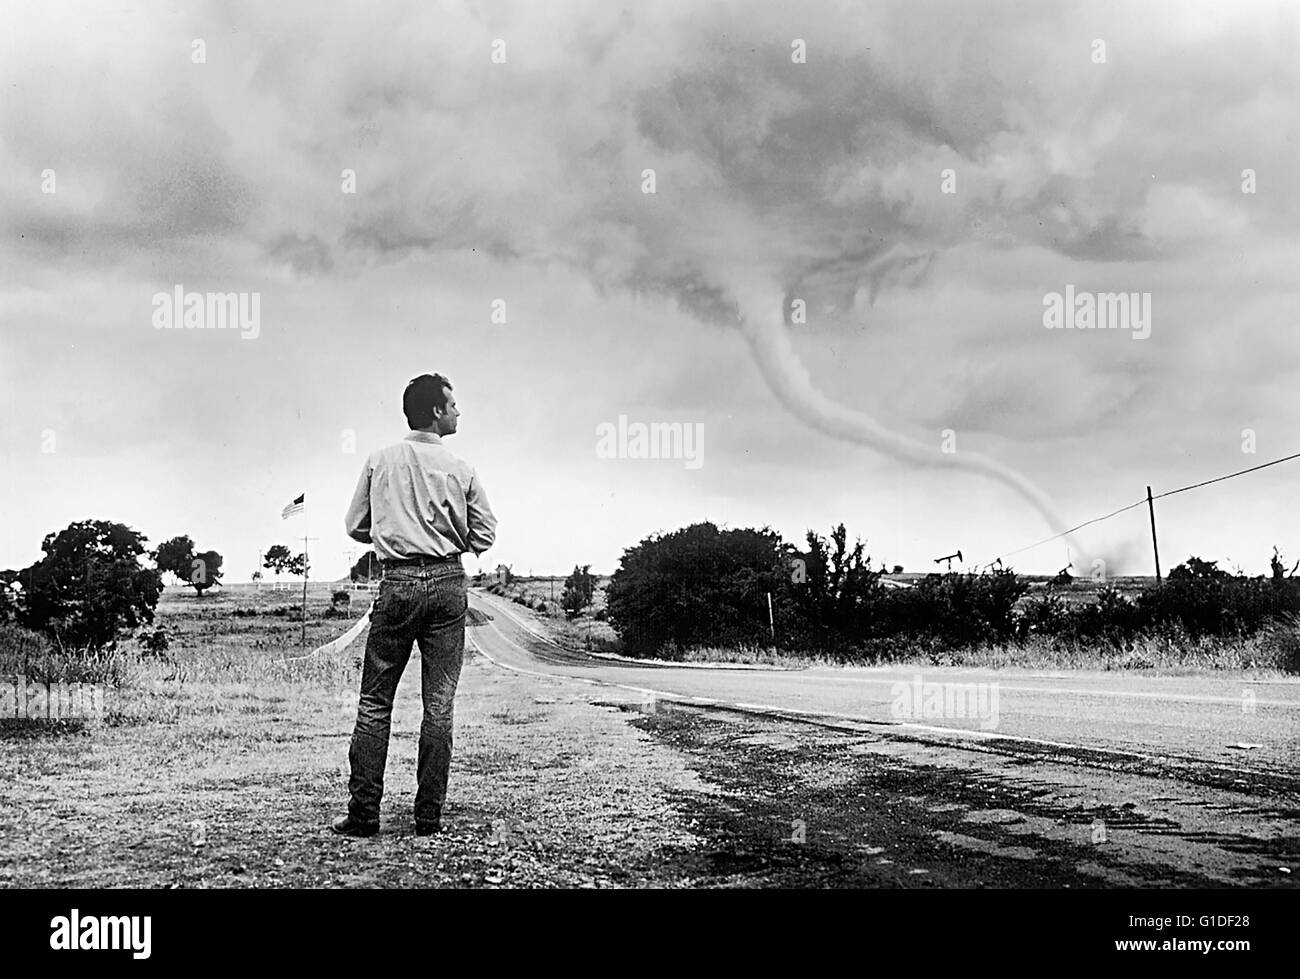 Twister / Bill Paxton, Stock Photo